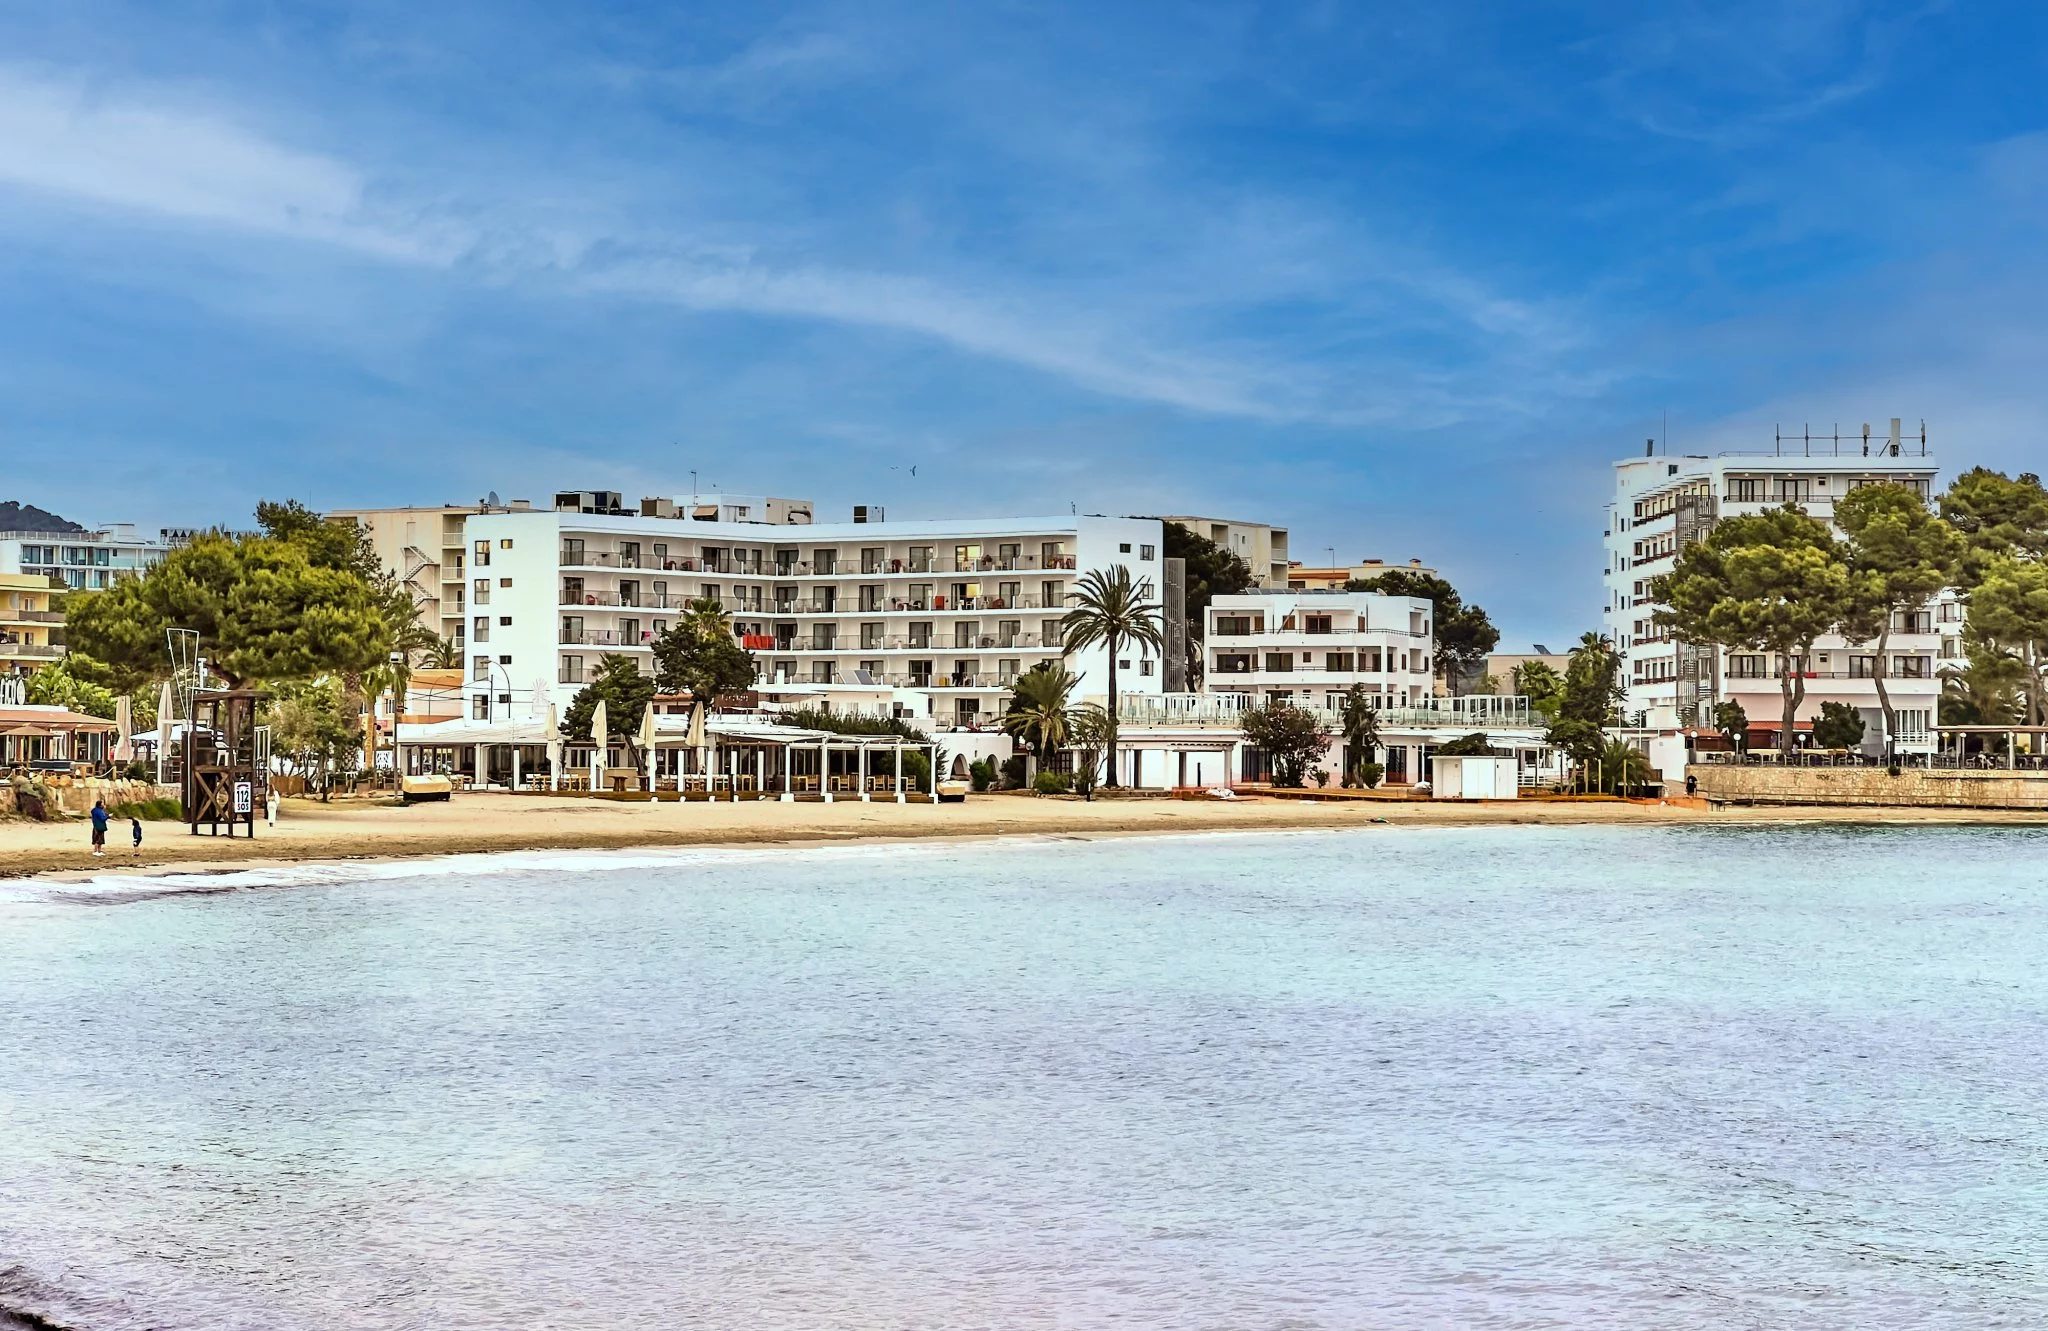 Leonardo Suites Hotel Ibiza Santa Eulalia - View